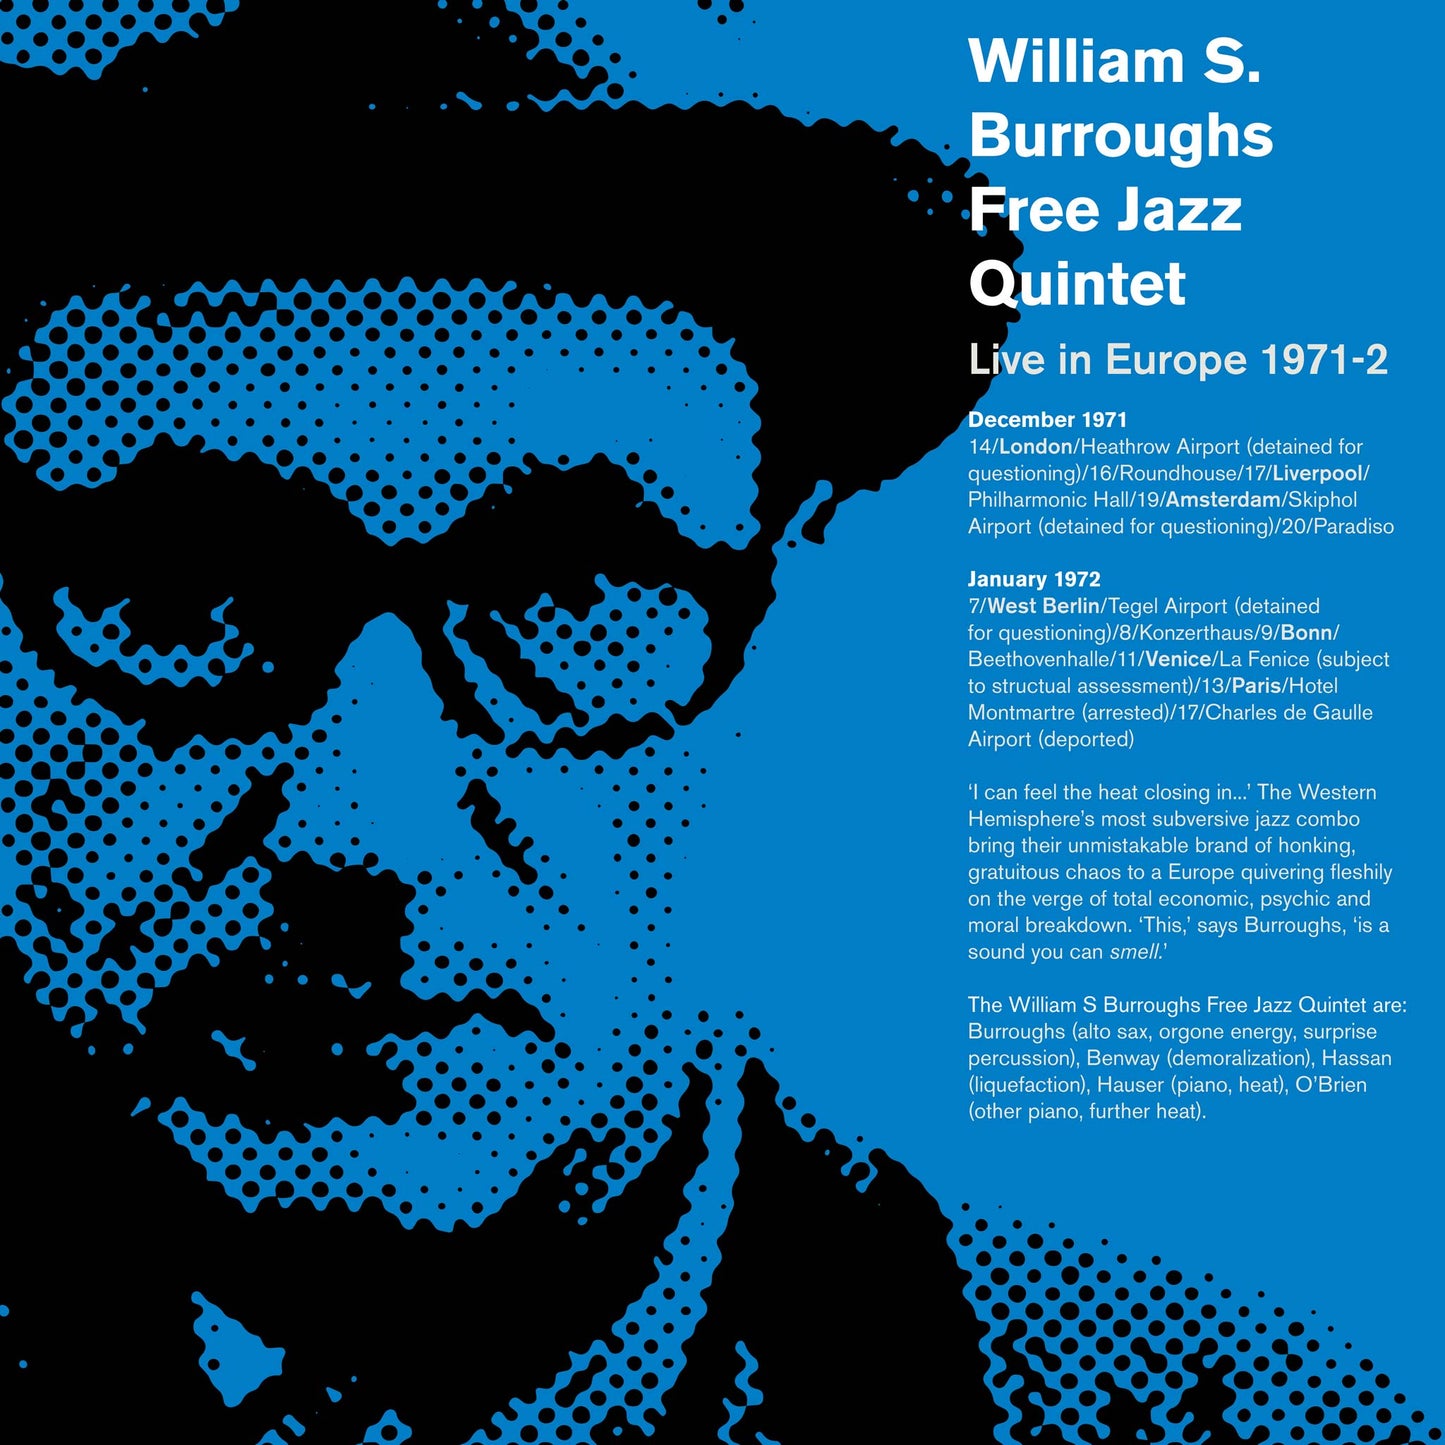 William S Burroughs Free Jazz Quintet Concert Poster Print